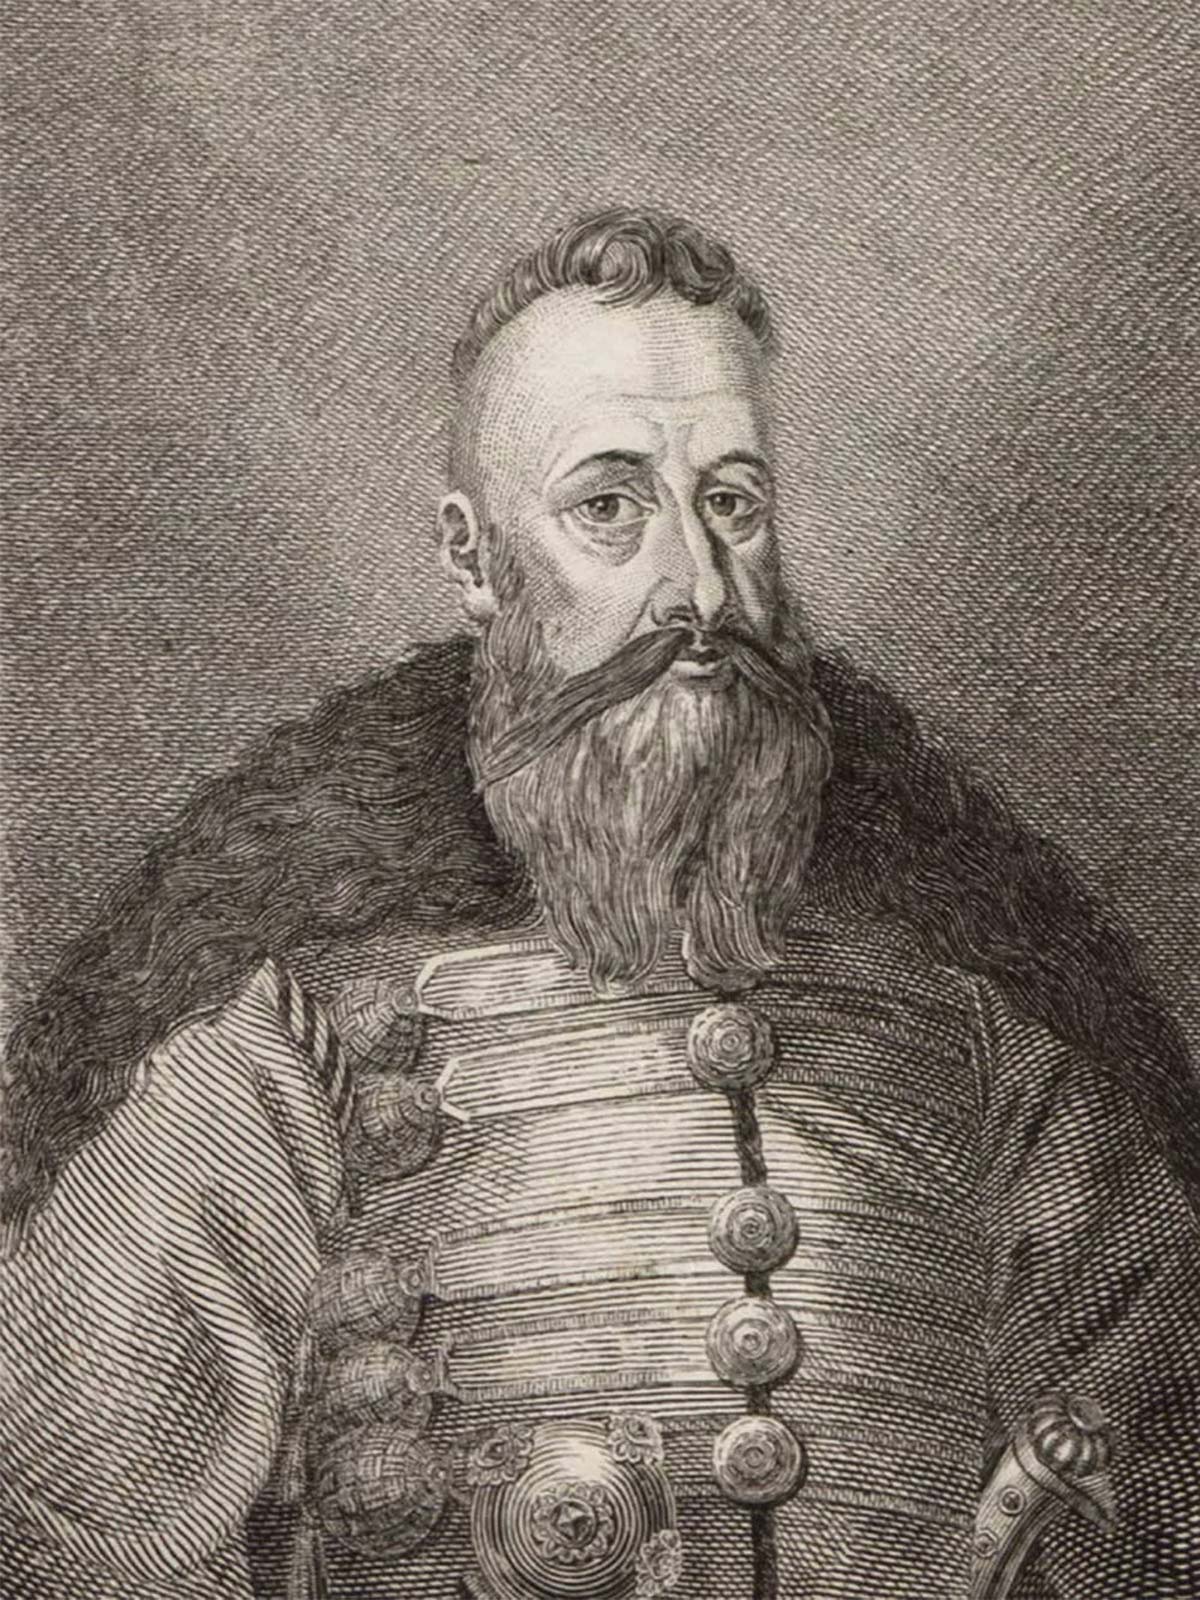 Станіслав Конецпольський (1591-1646) — польський гетьман (©wikipedia)